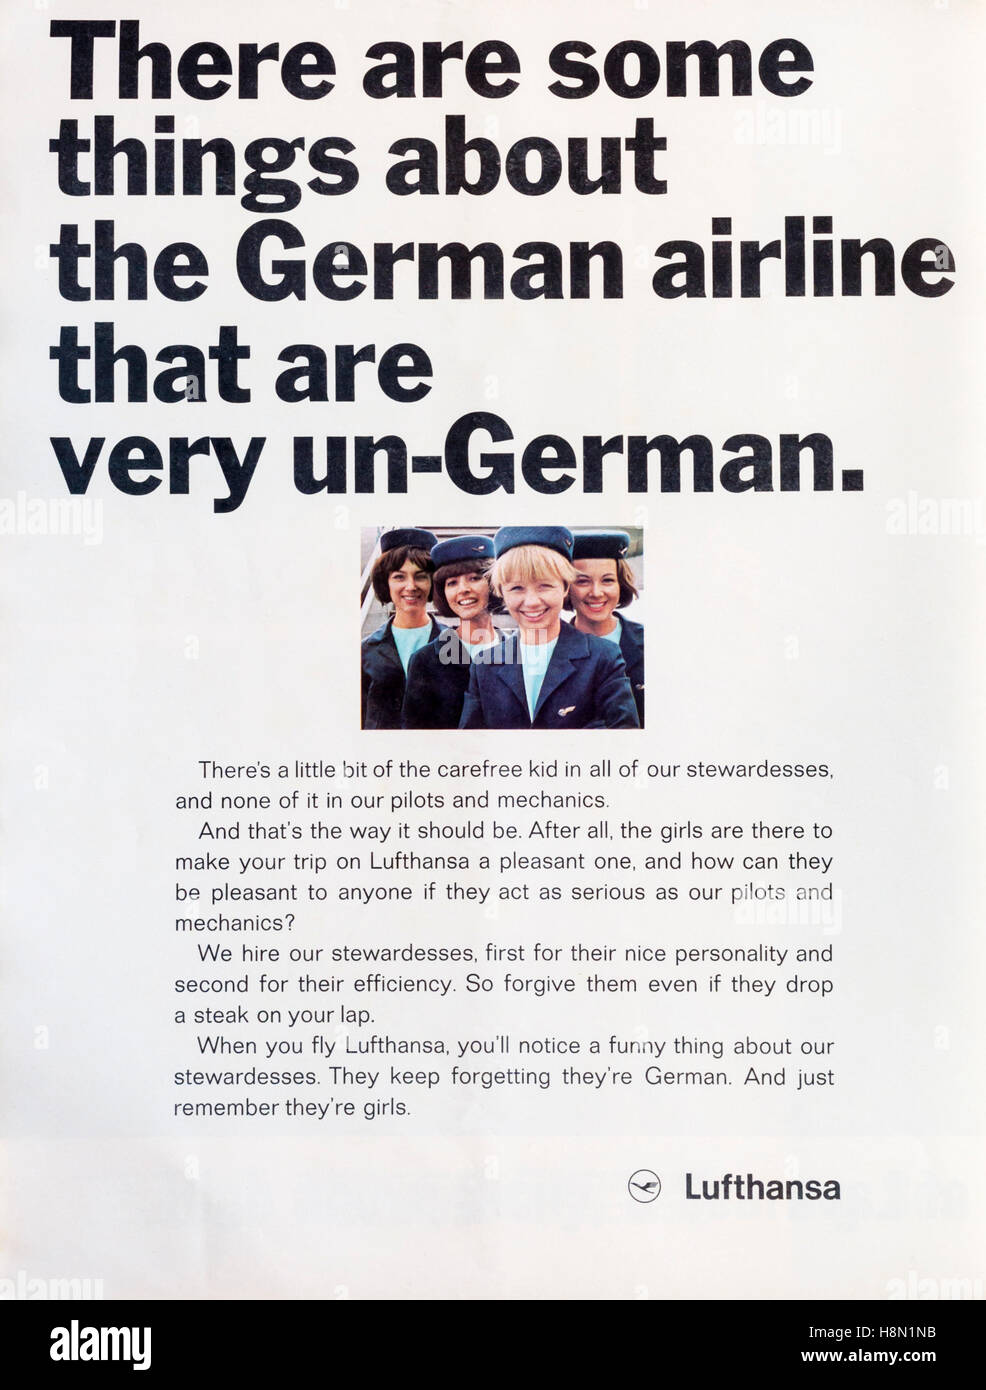 1960s magazine advertisement advertising Lufthansa, the German airline. Stock Photo